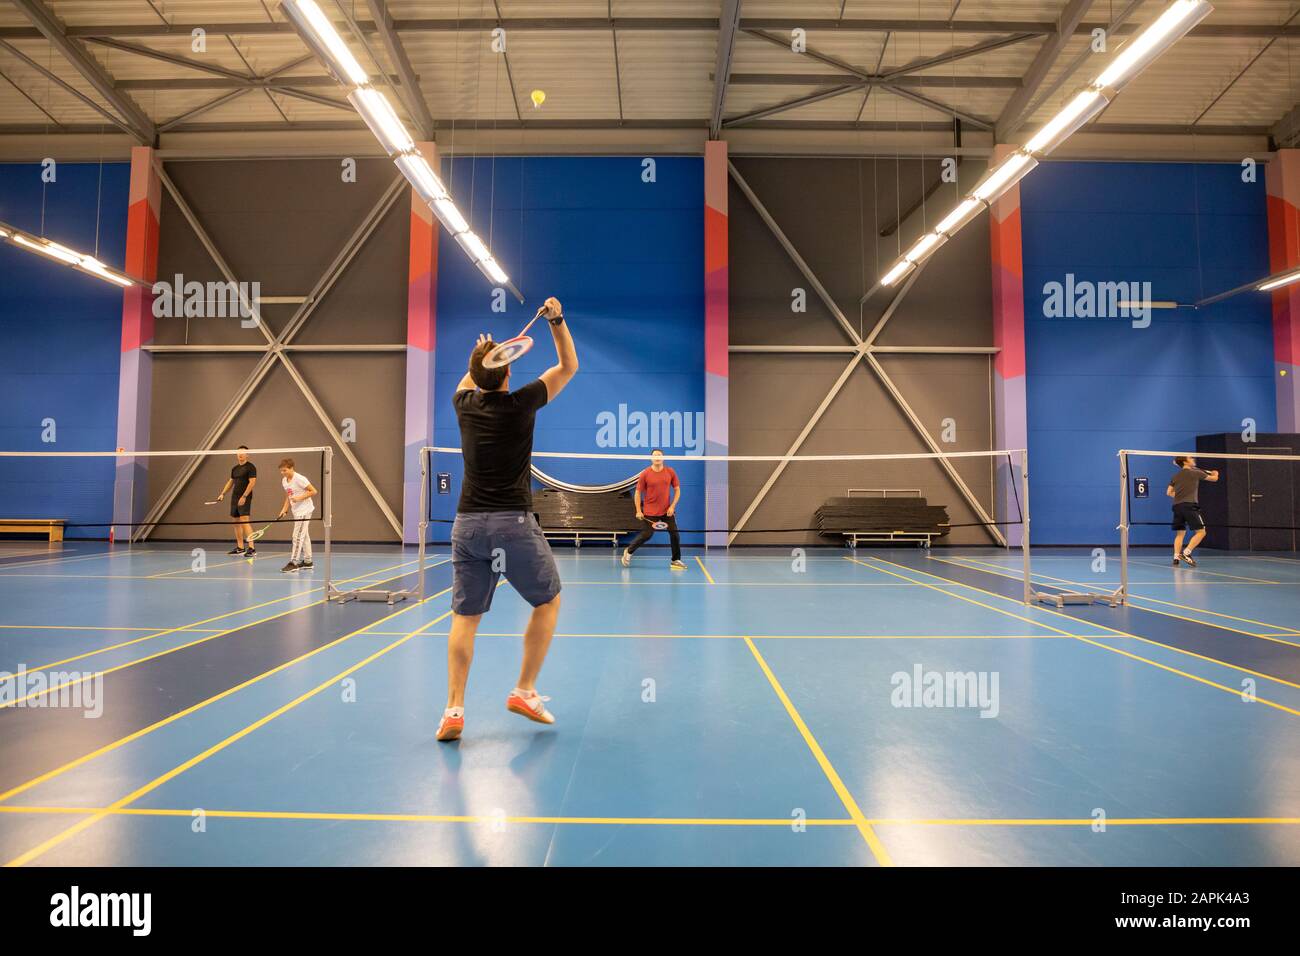 Prague, Czech Republic - 18.01.2020: Indoor badminton courts with players competing, amateur sport in Prague, Czech Republic Stock Photo